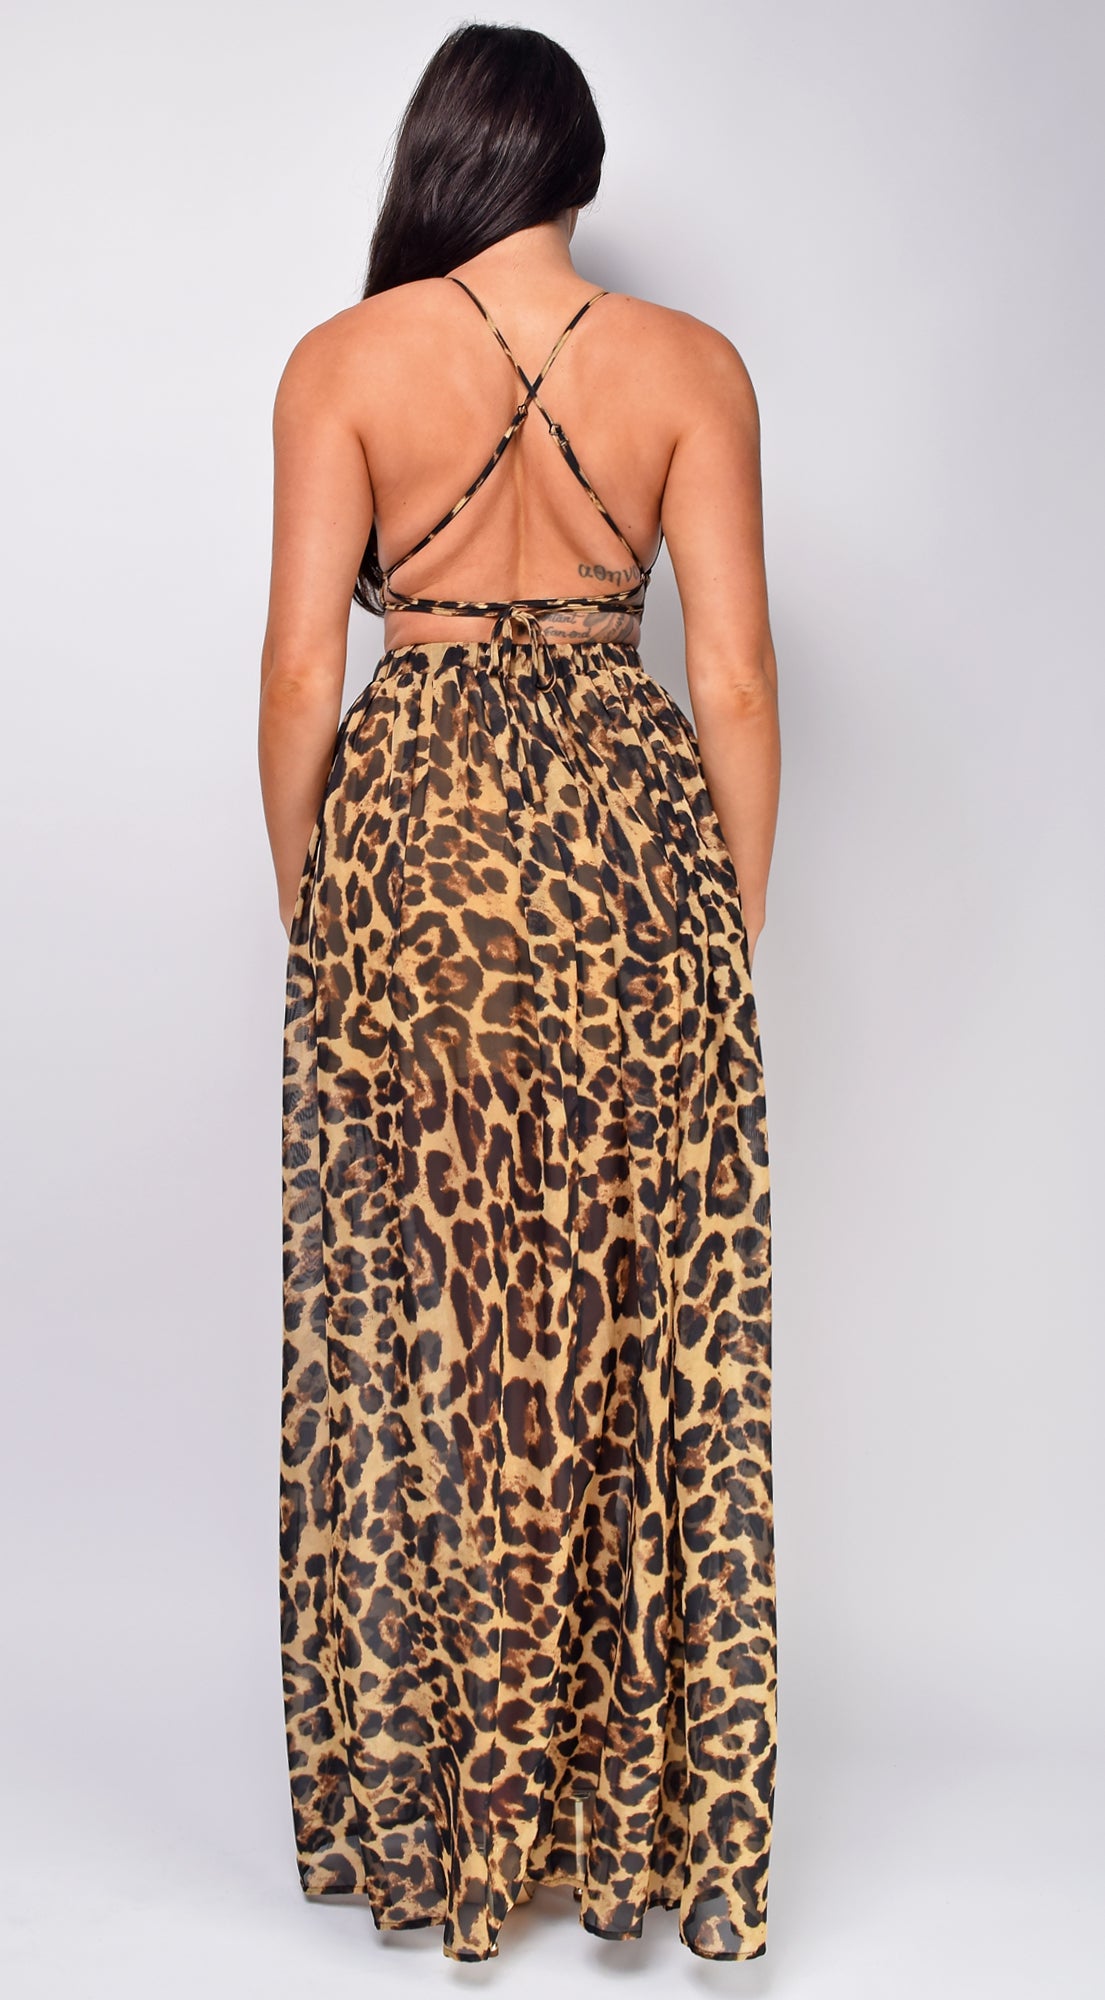 Ravenna Brown Leopard Print Double Slit Maxi Dress